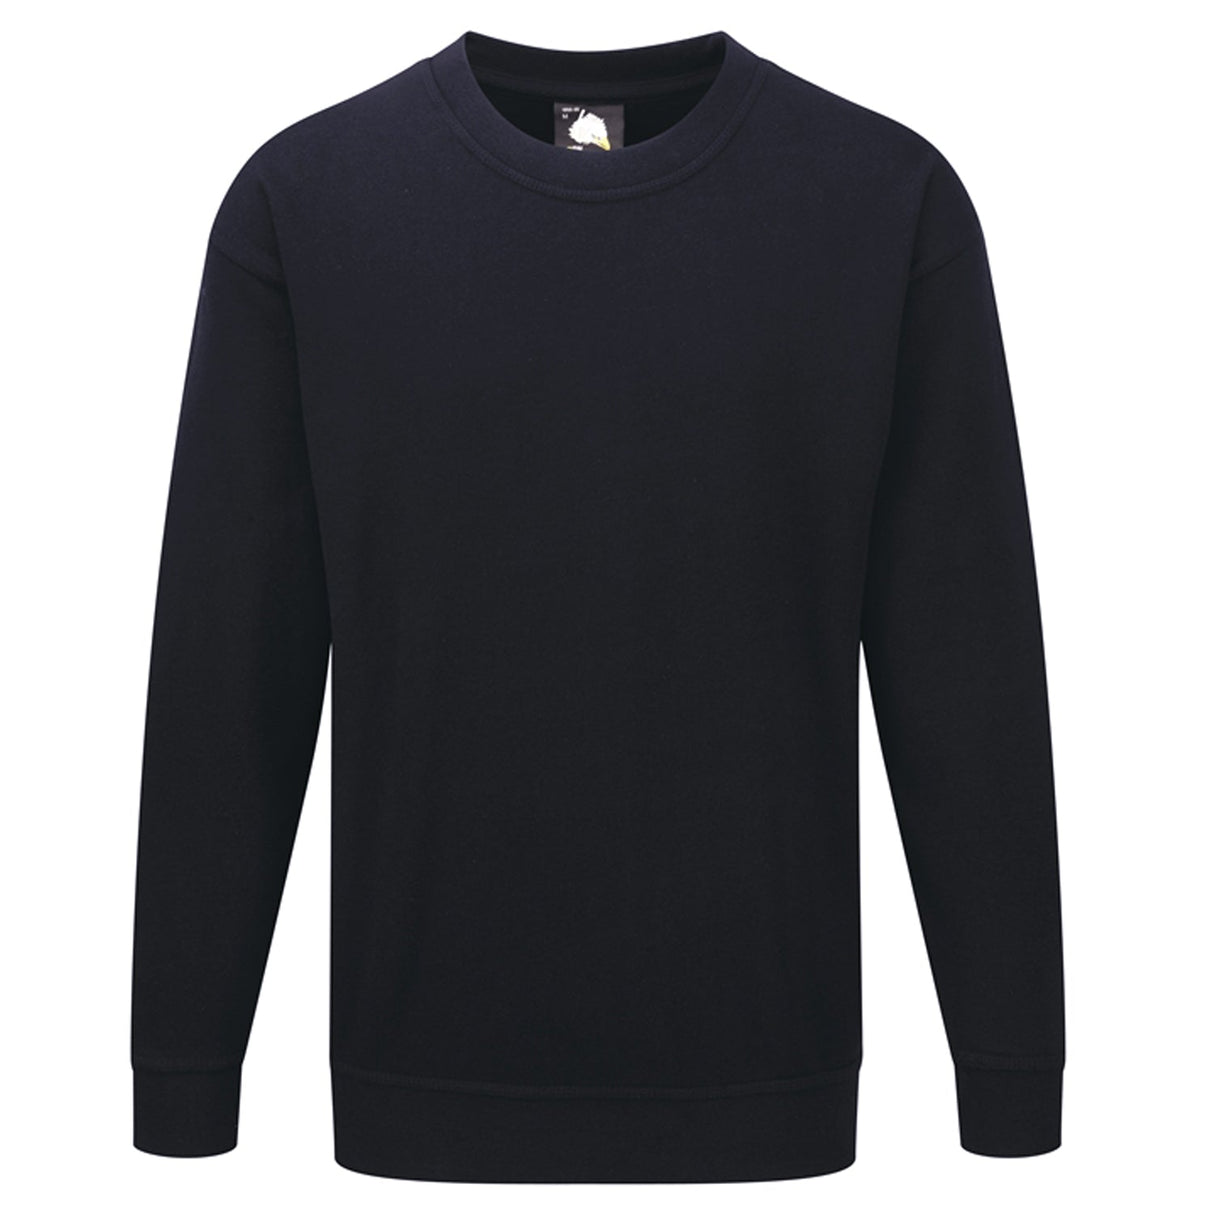 Orn Clothing Seagull 100% Cotton Sweatshirt